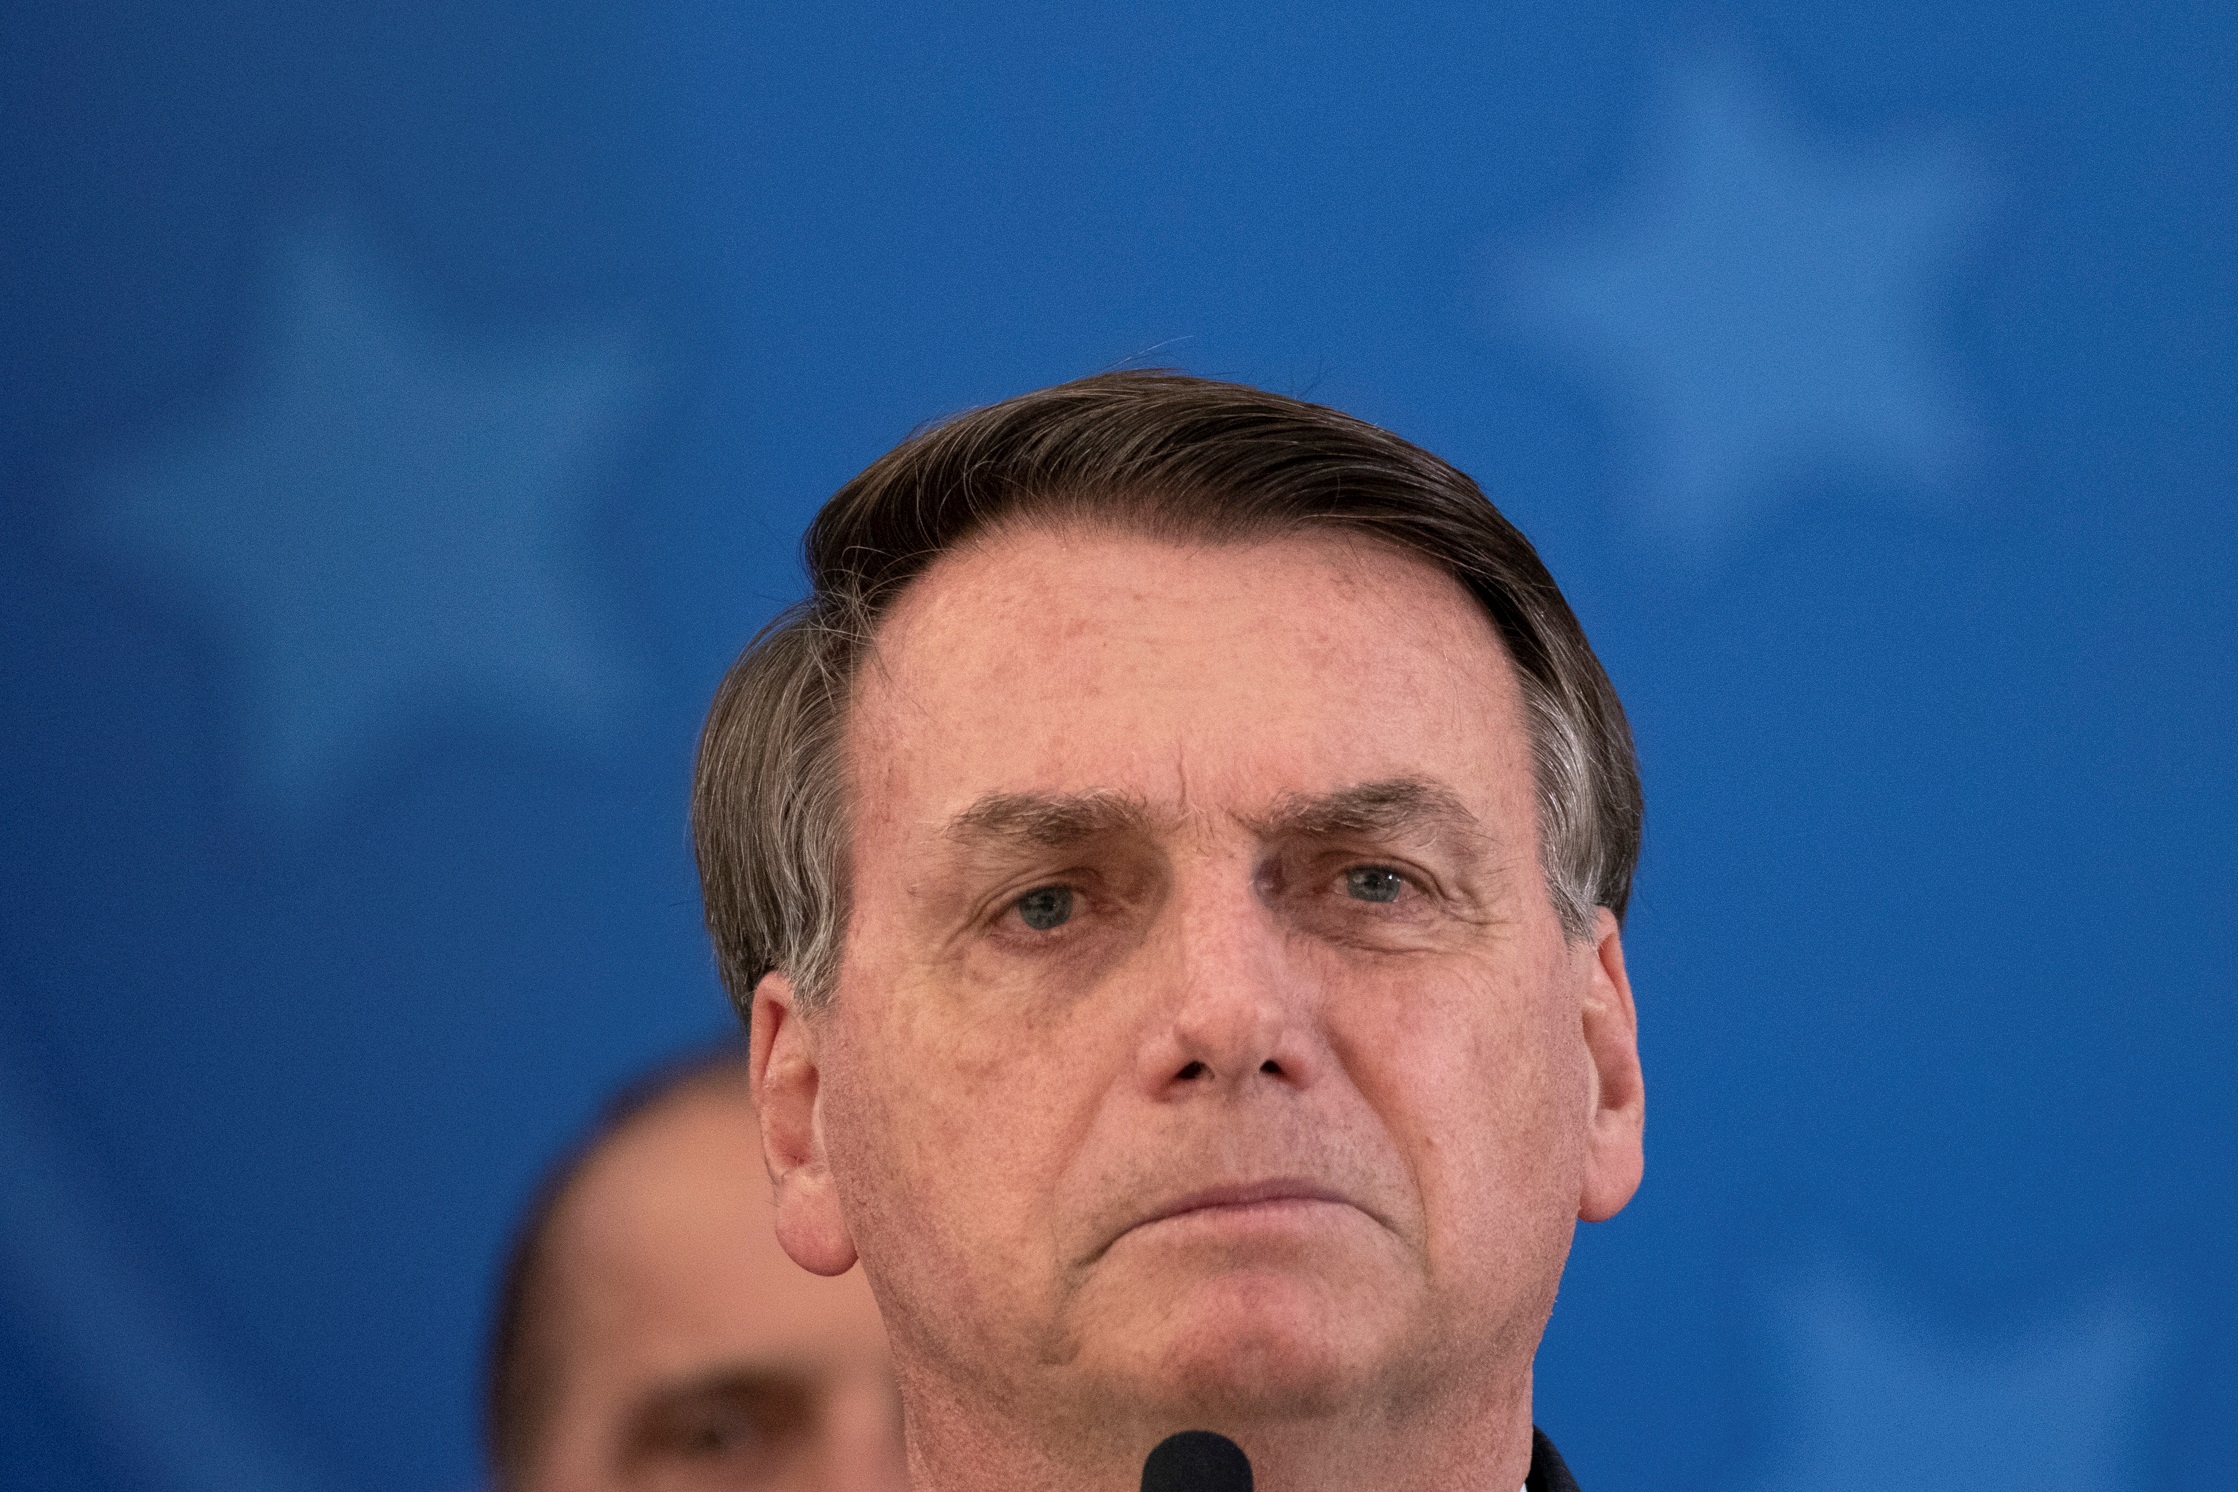 “Es horrible”, dijo Bolsonaro harto de la cuarentena por coronavirus